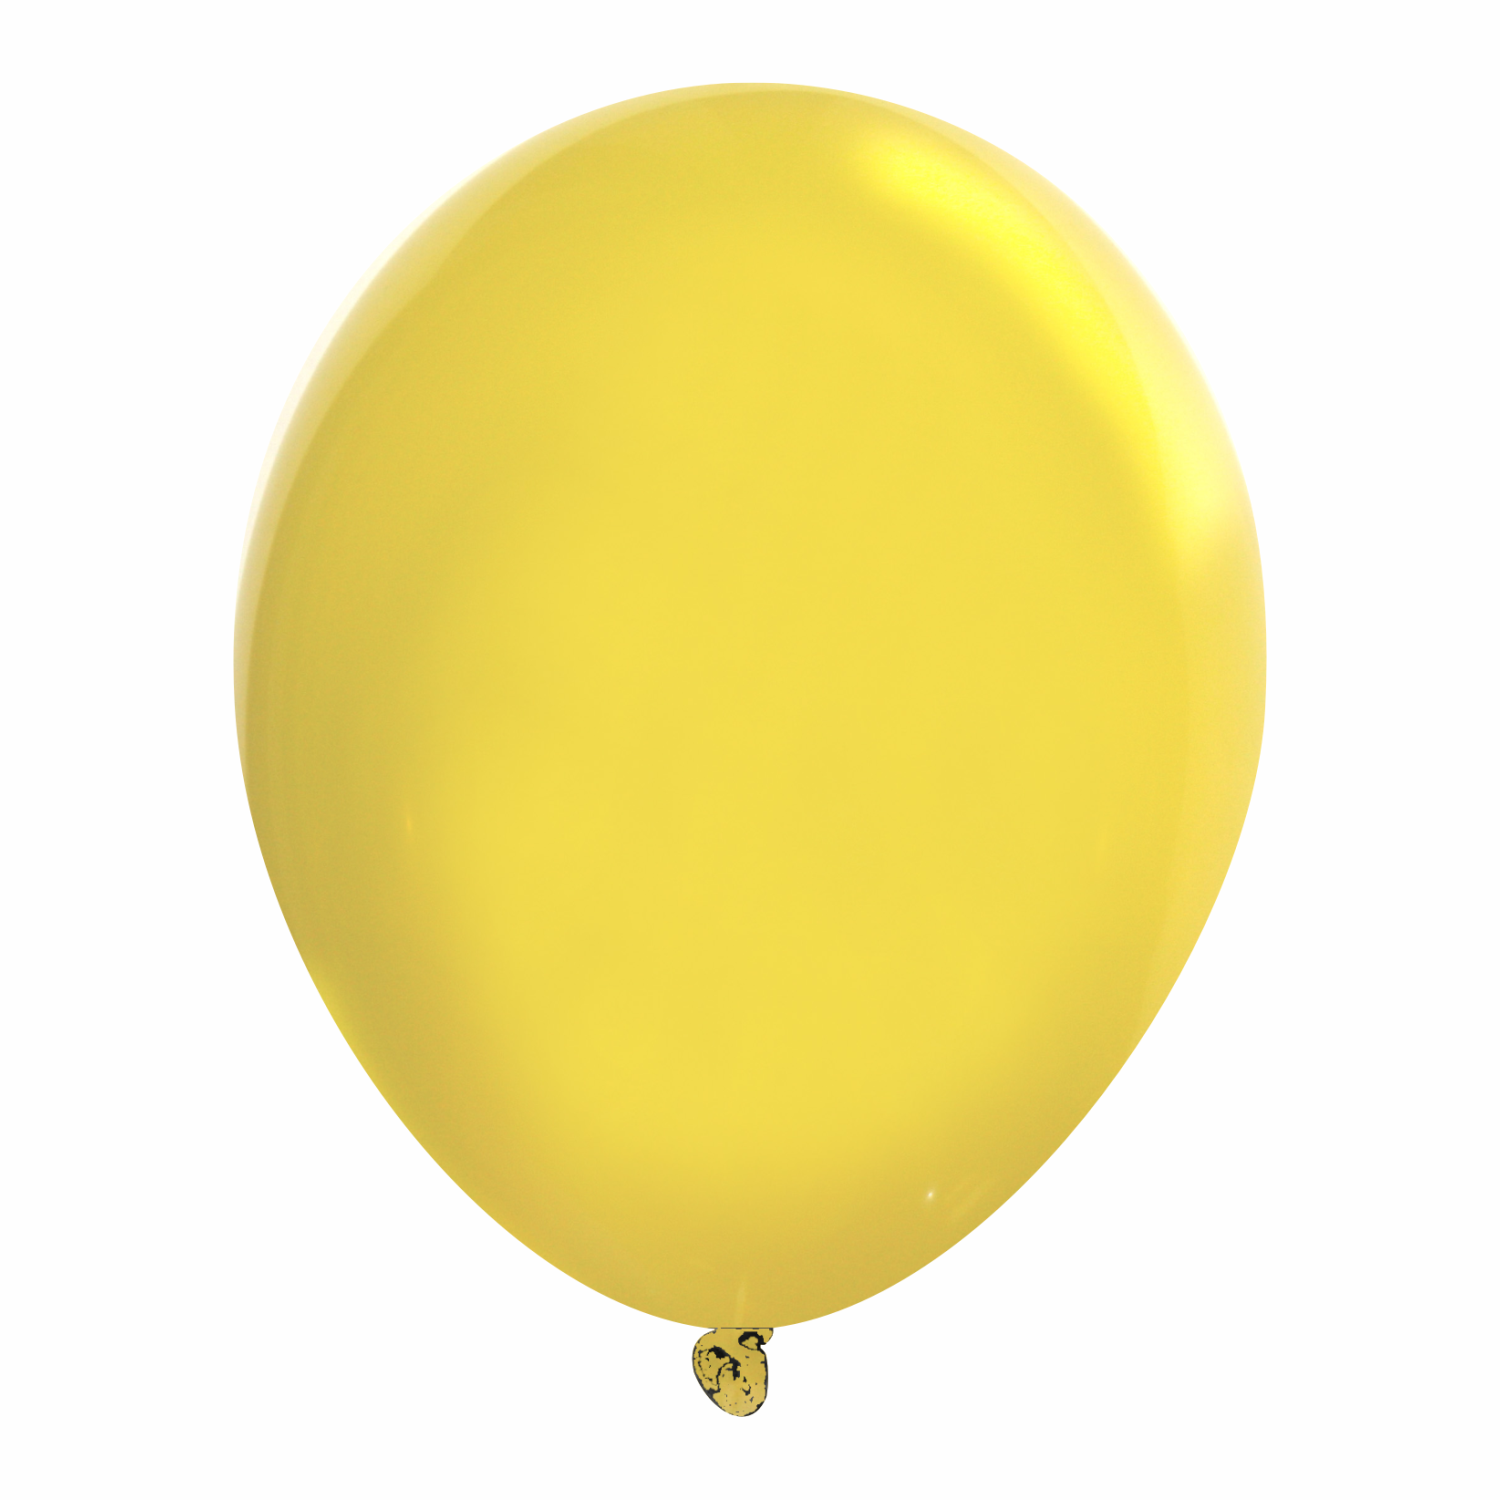 http://images.officebrain.com/migration-api-hidden-new/web/images/626/11crye-lemon-yellow.png